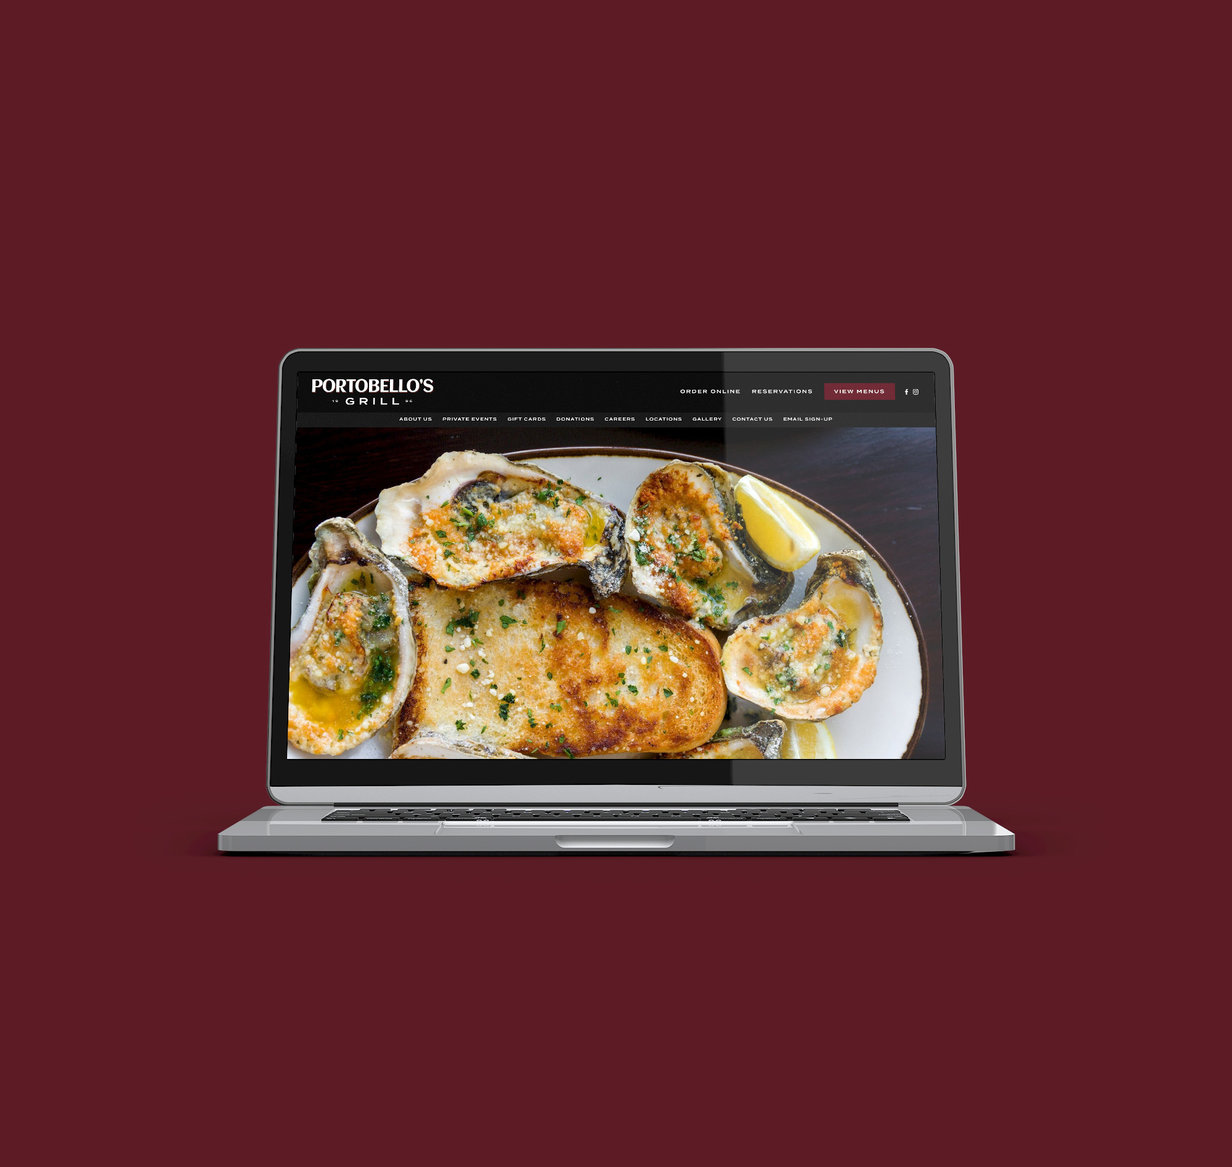 Portobellos Website On Laptop